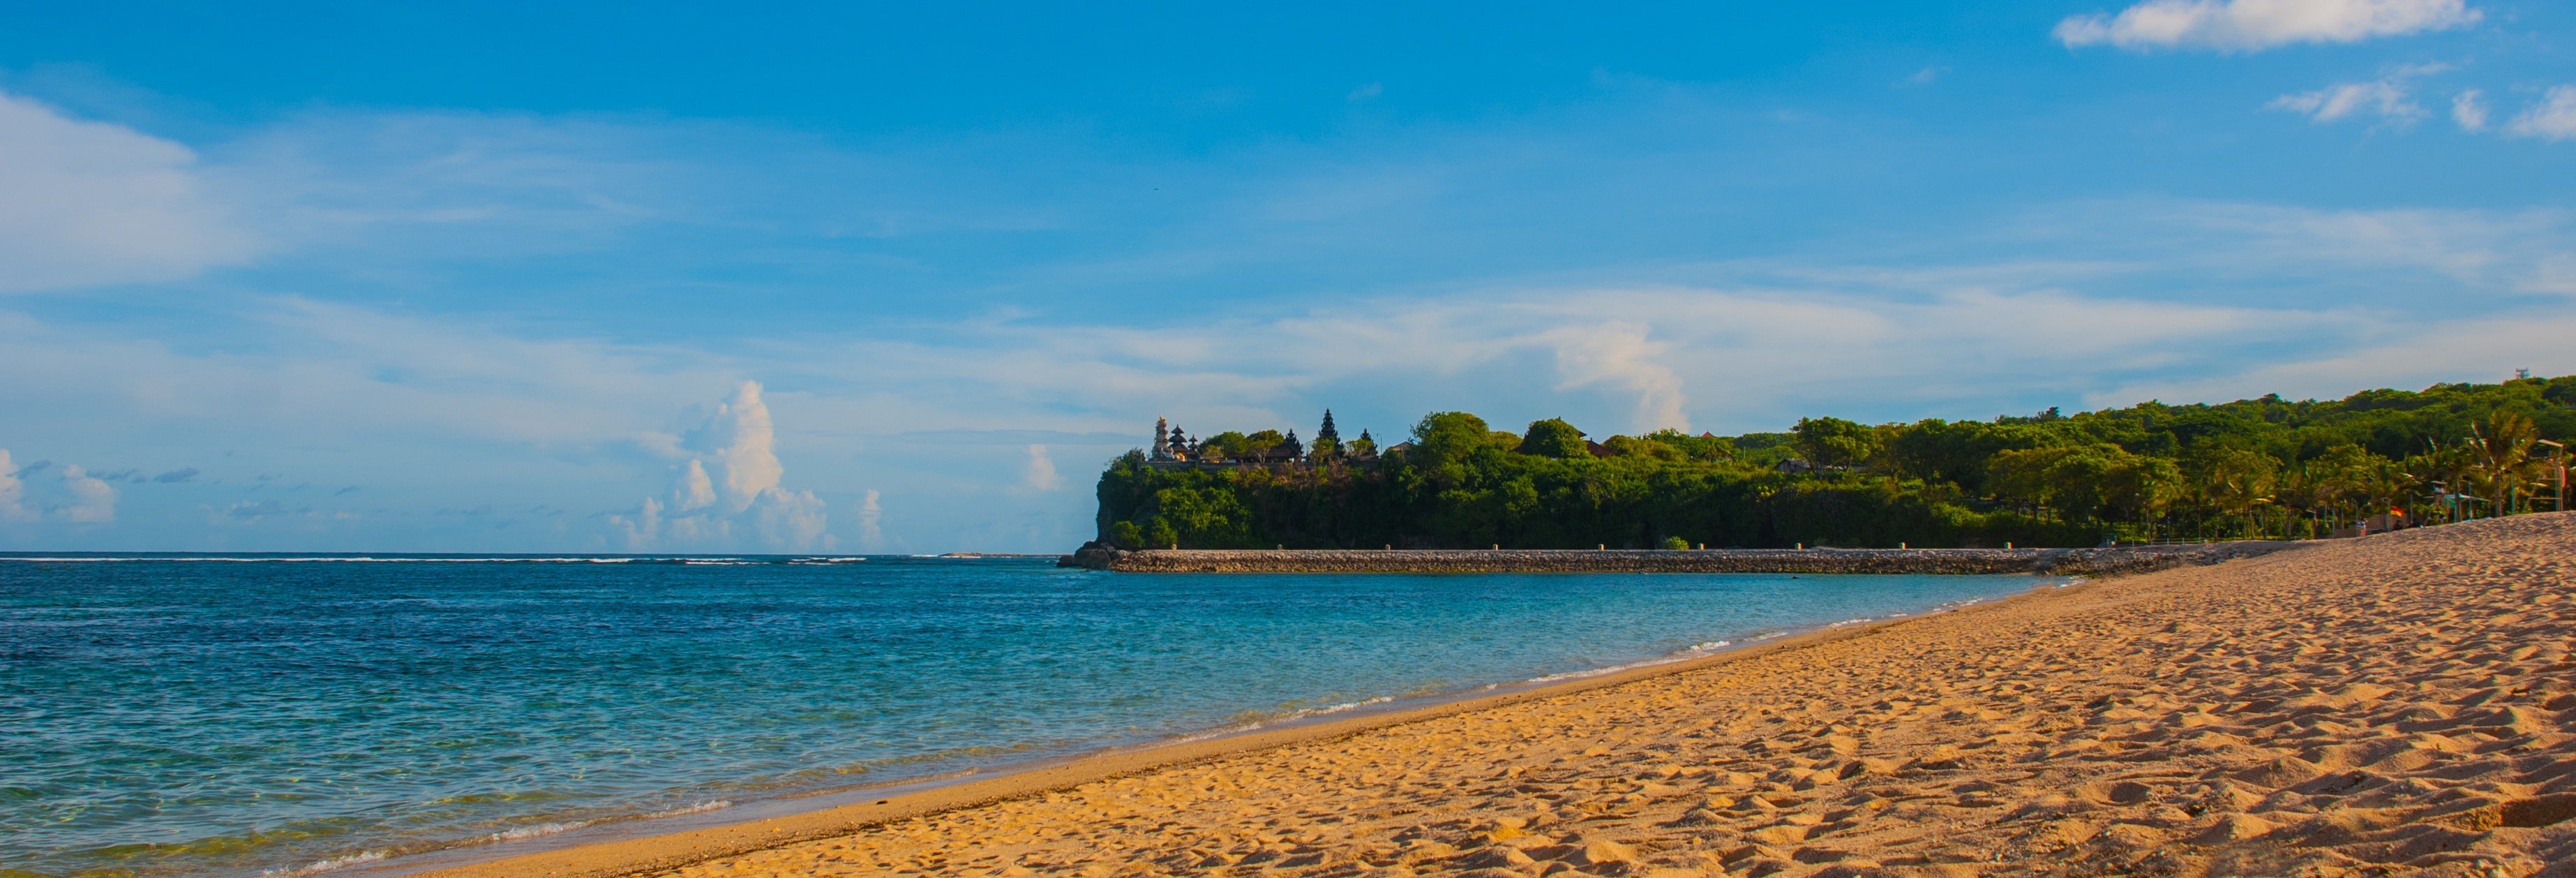 Best Beaches in Bali Tour